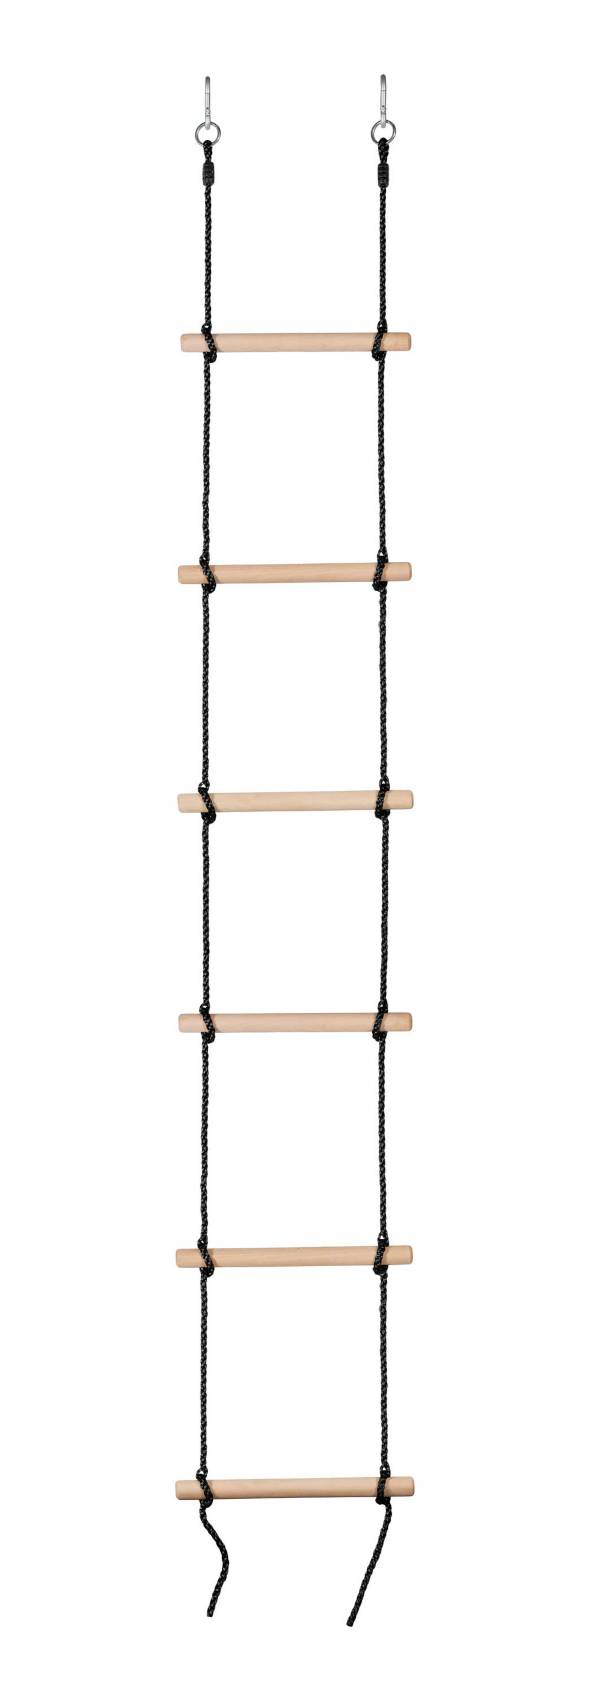 Swingan Climbing Rope Ladder product image